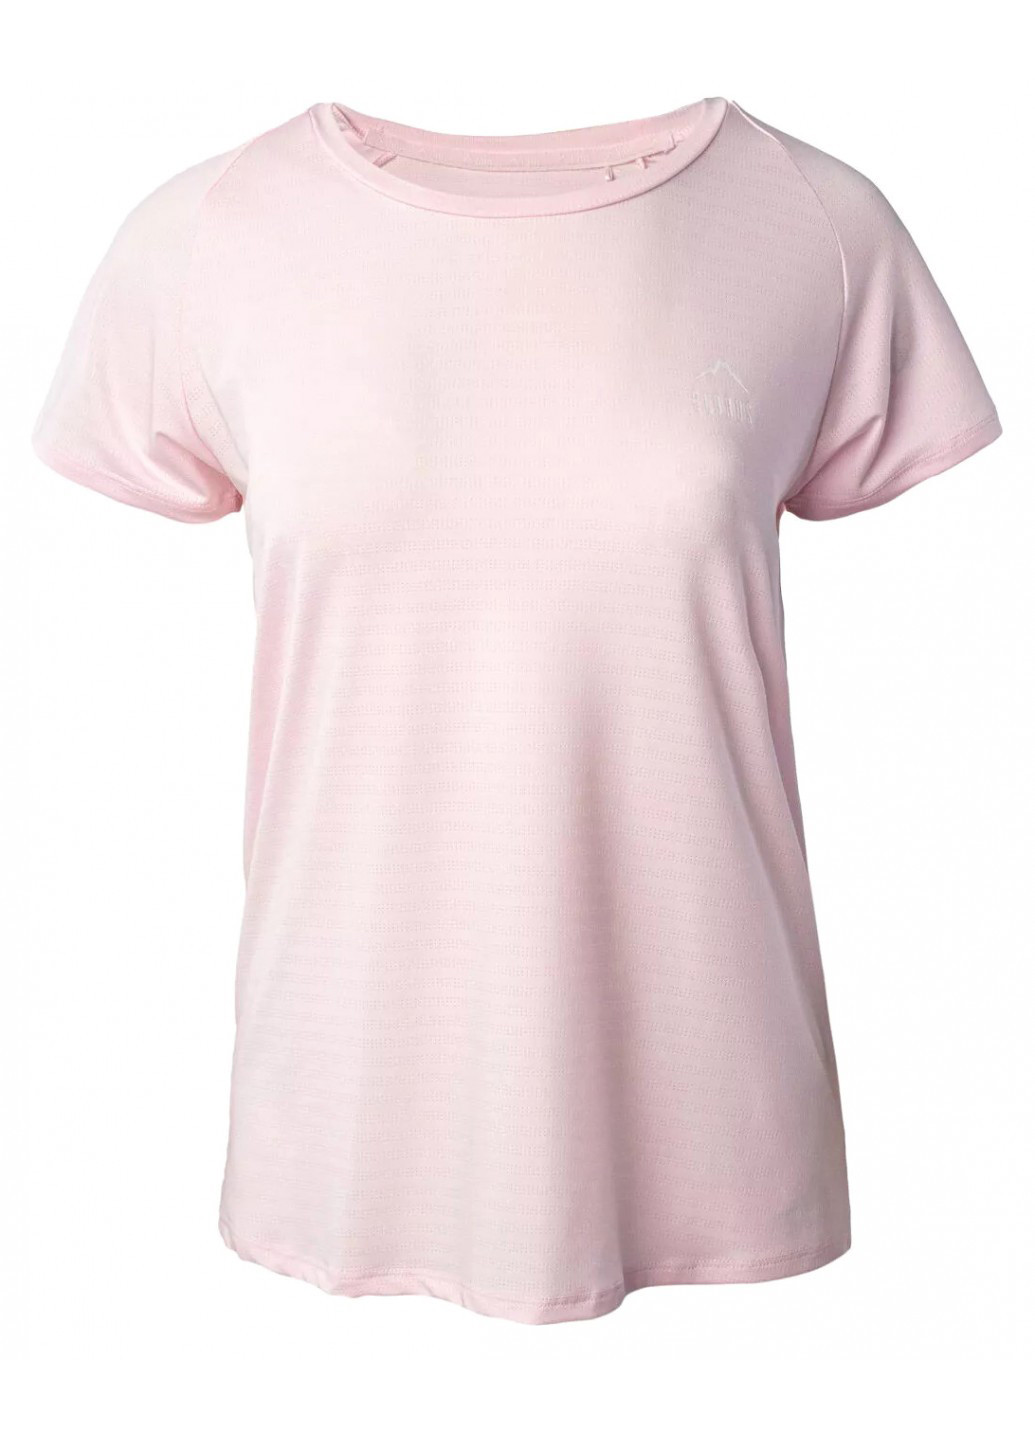 Светло-розовая летняя футболка Elbrus